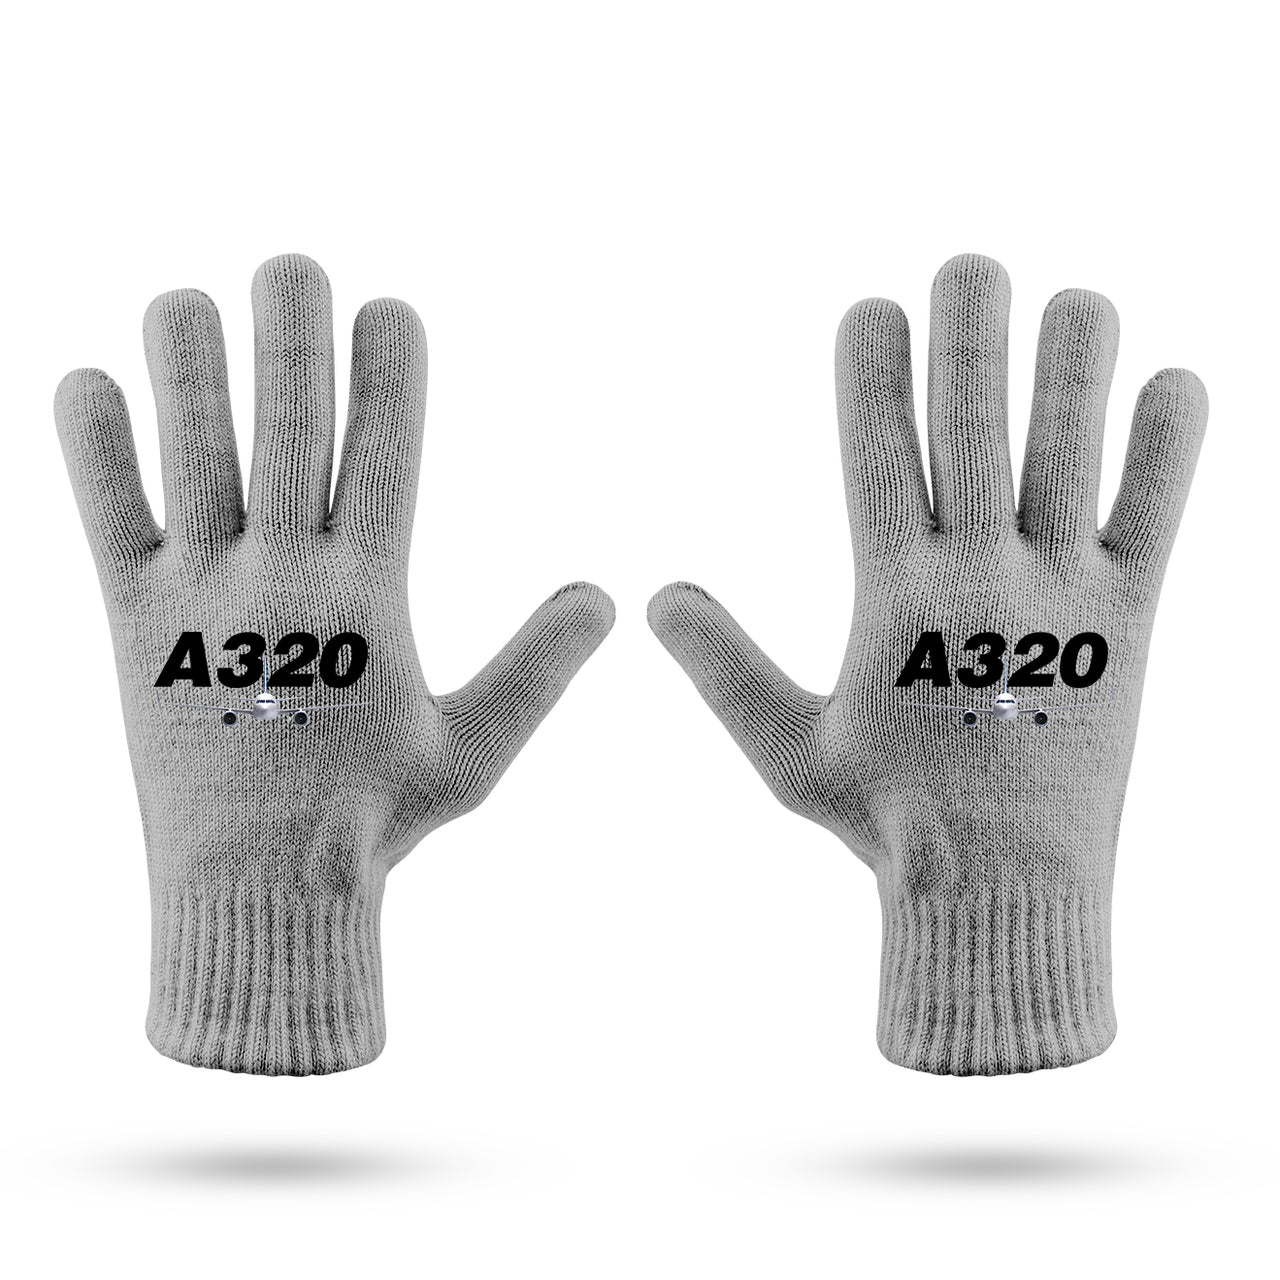 Super Airbus A320 Designed Gloves